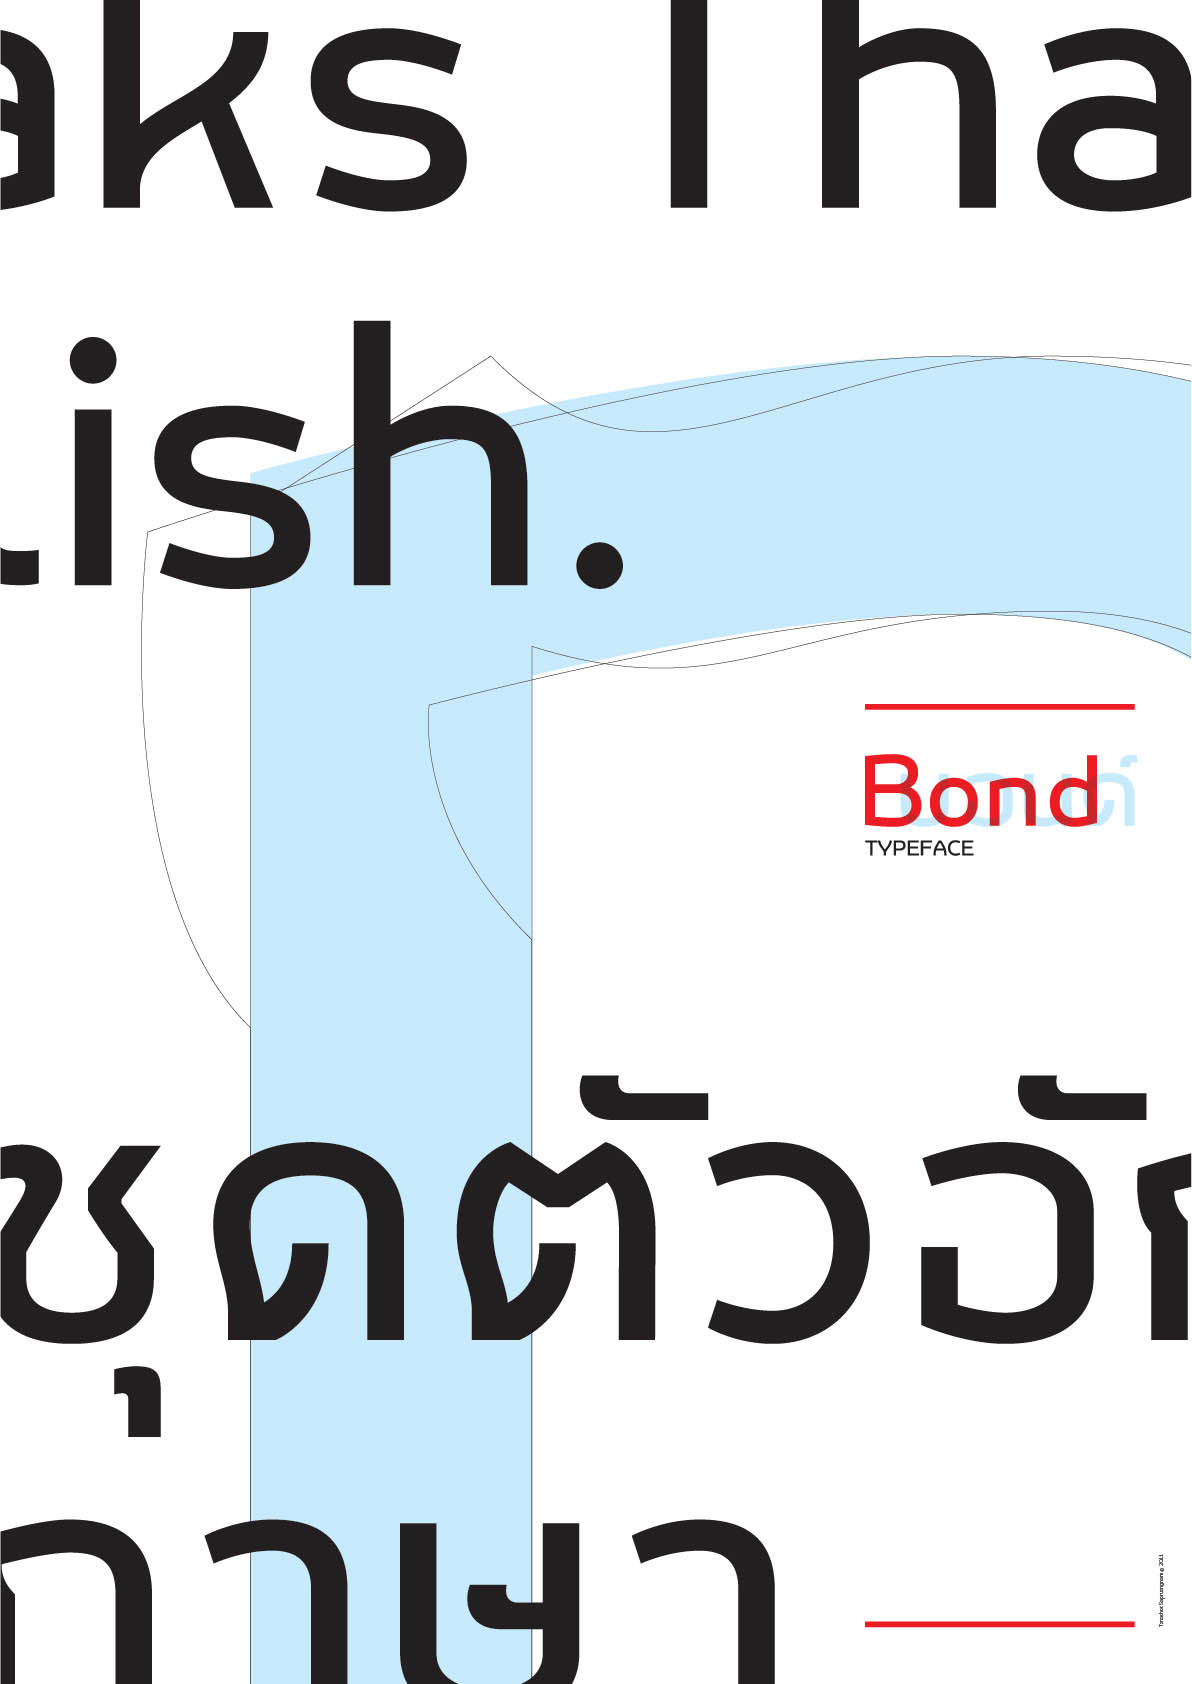 Bond is a Latin-Thai typeface design